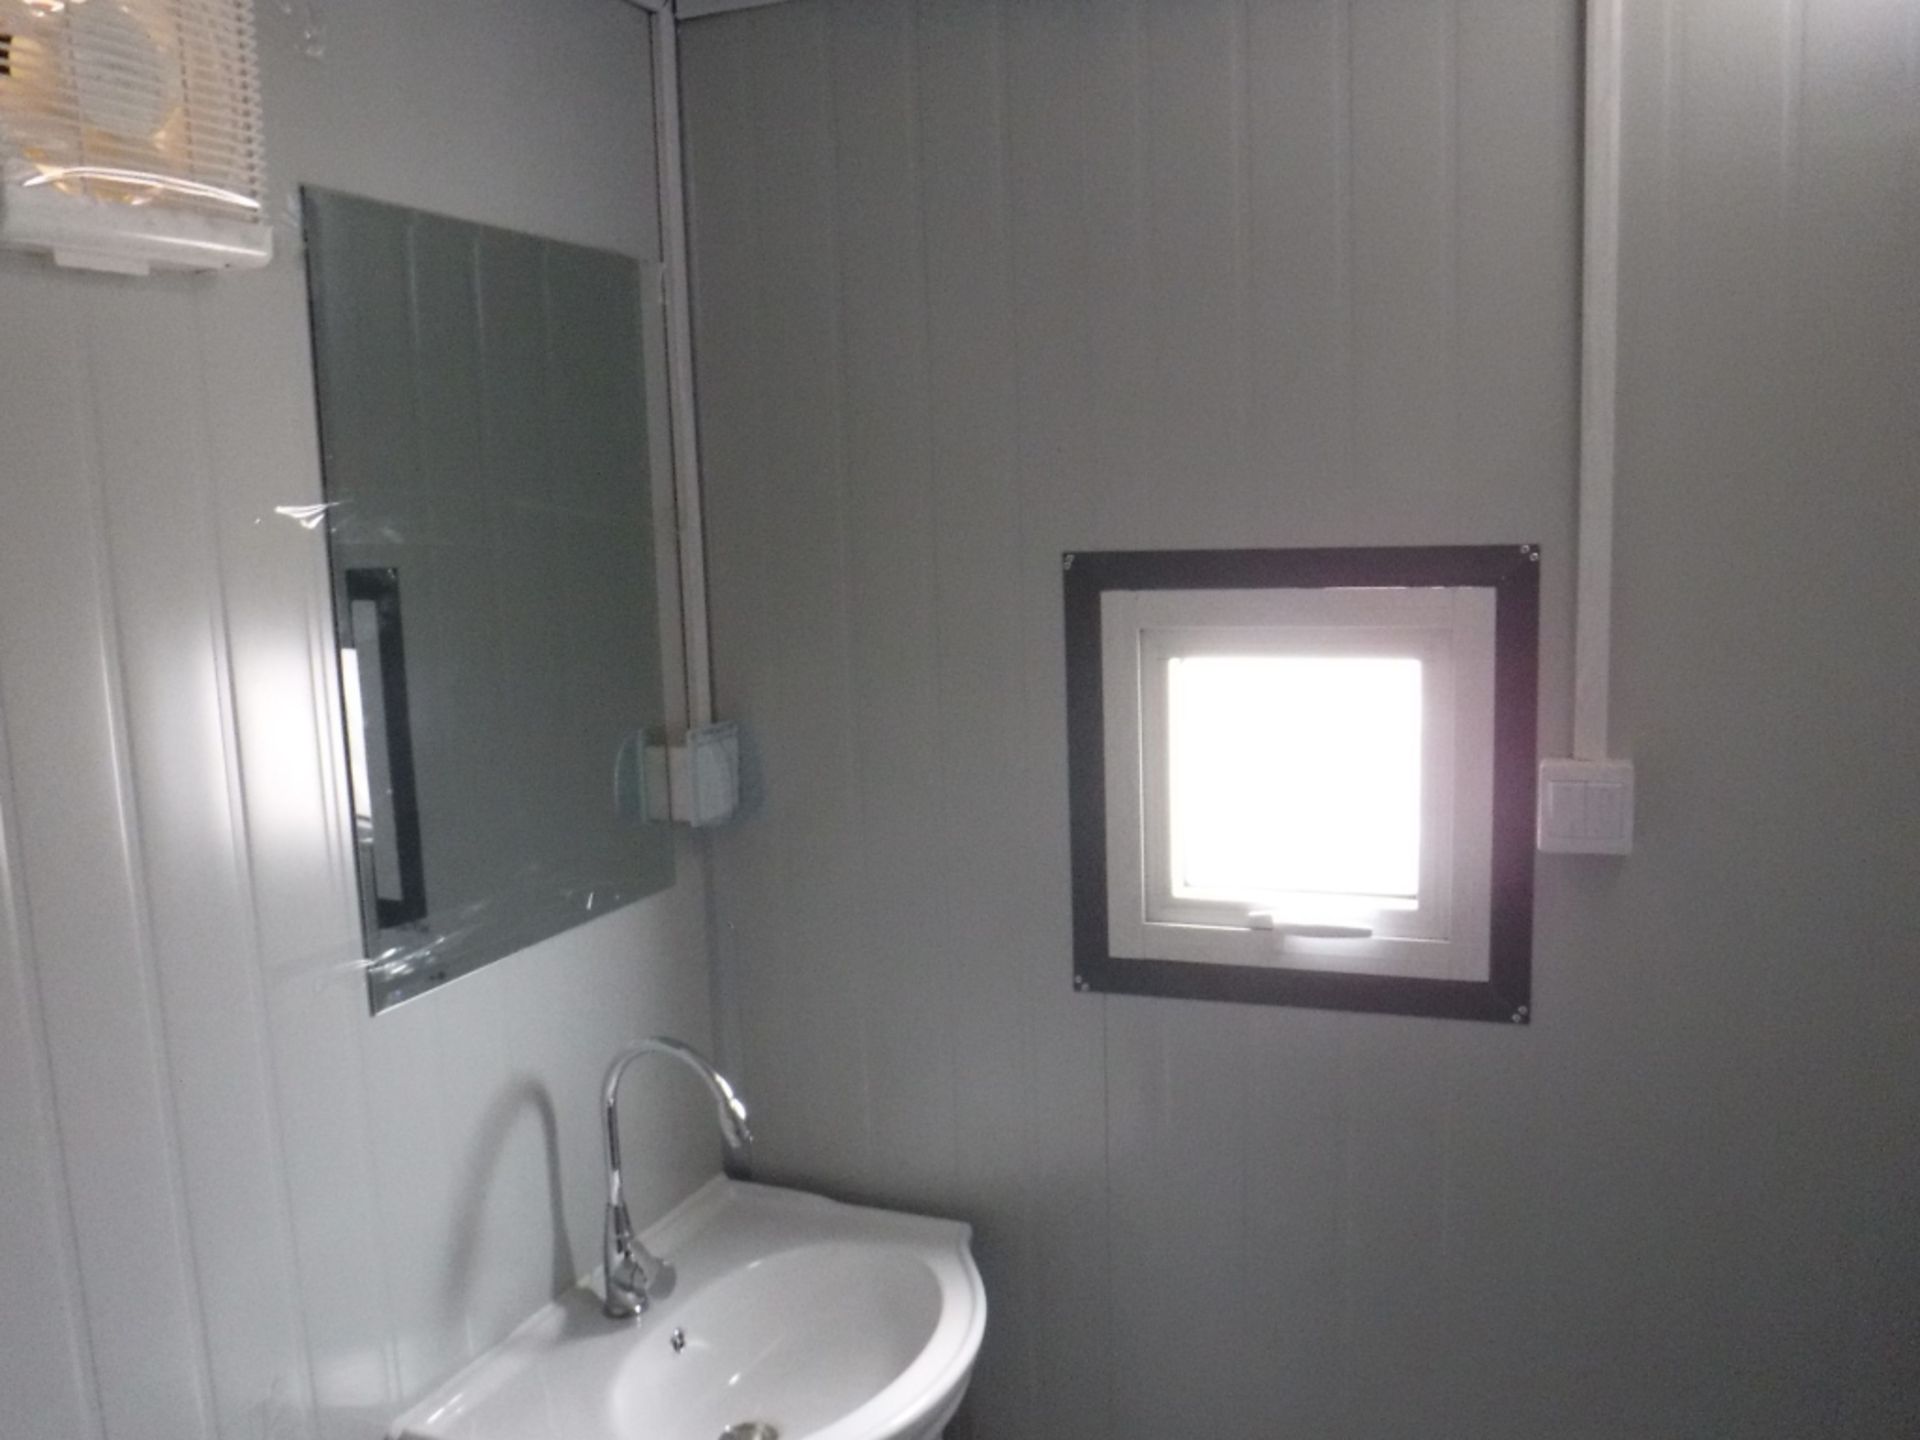 Unused 2021 Suihe Portable Shower, Sink - Image 7 of 8